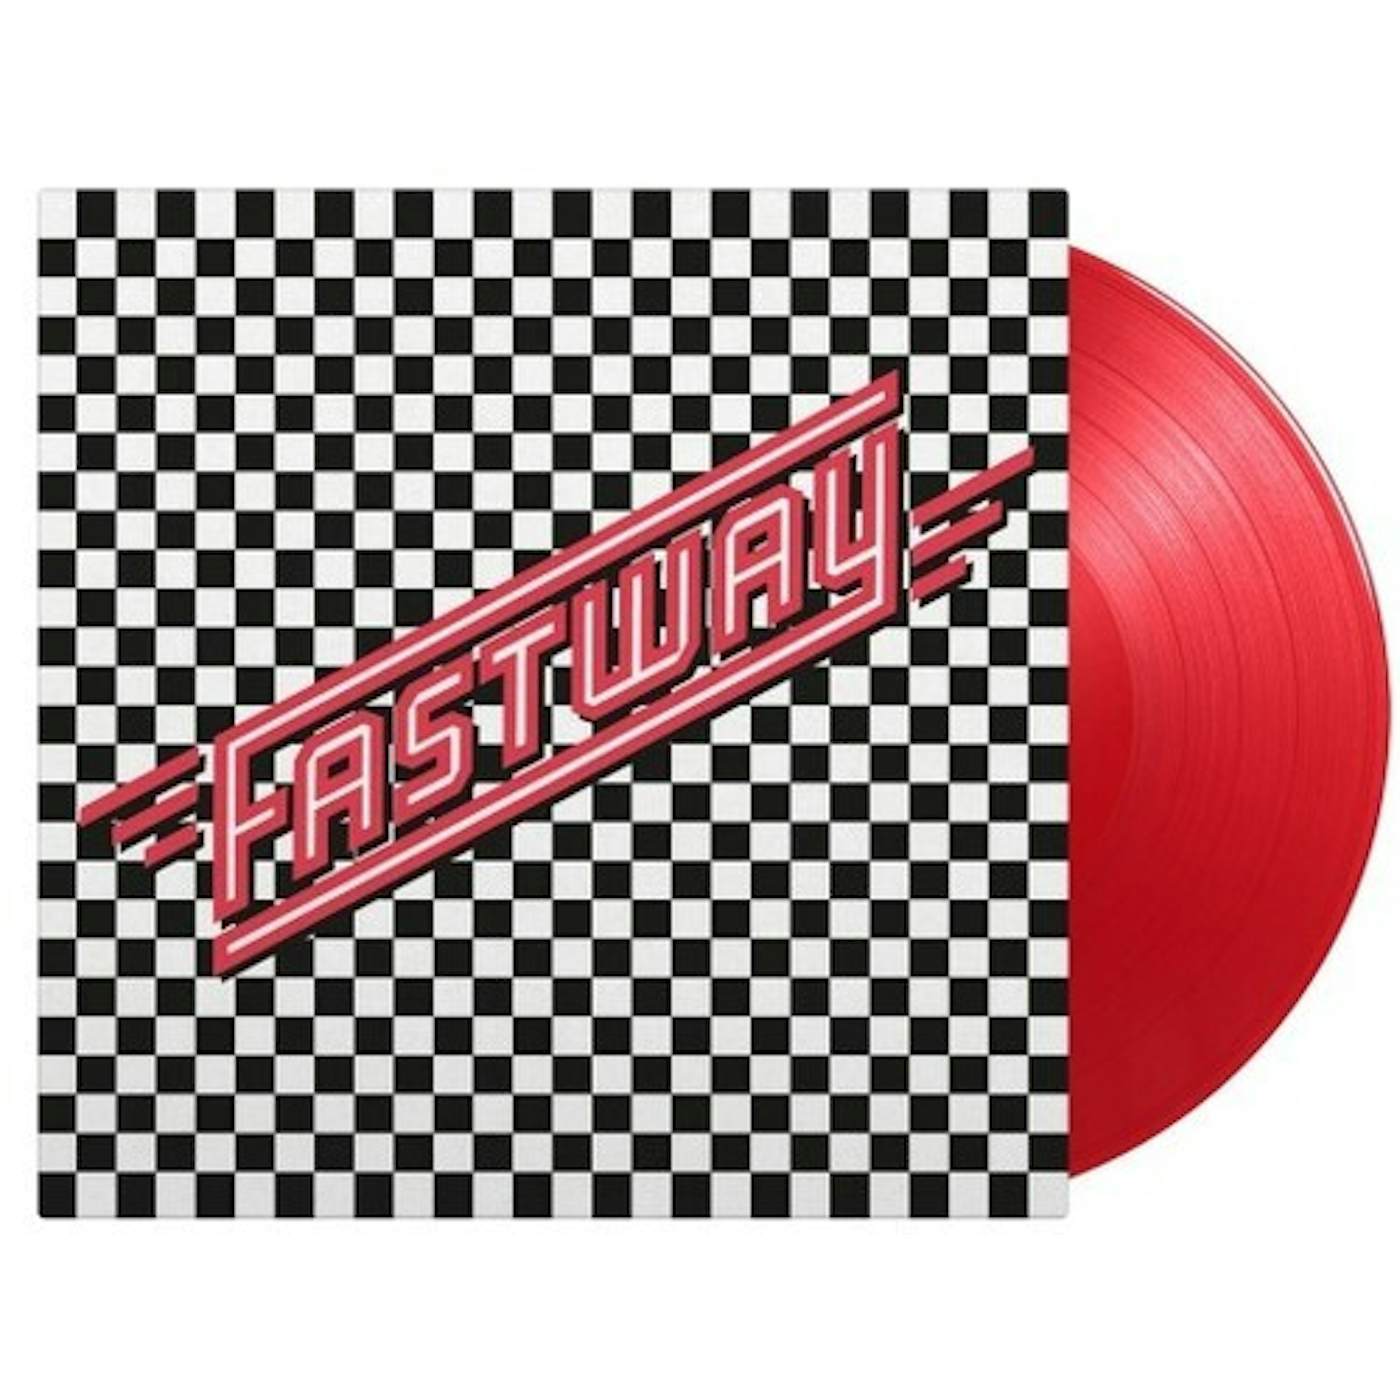 FASTWAY 40TH ANNIV (RED VINYL/180G) Vinyl Record